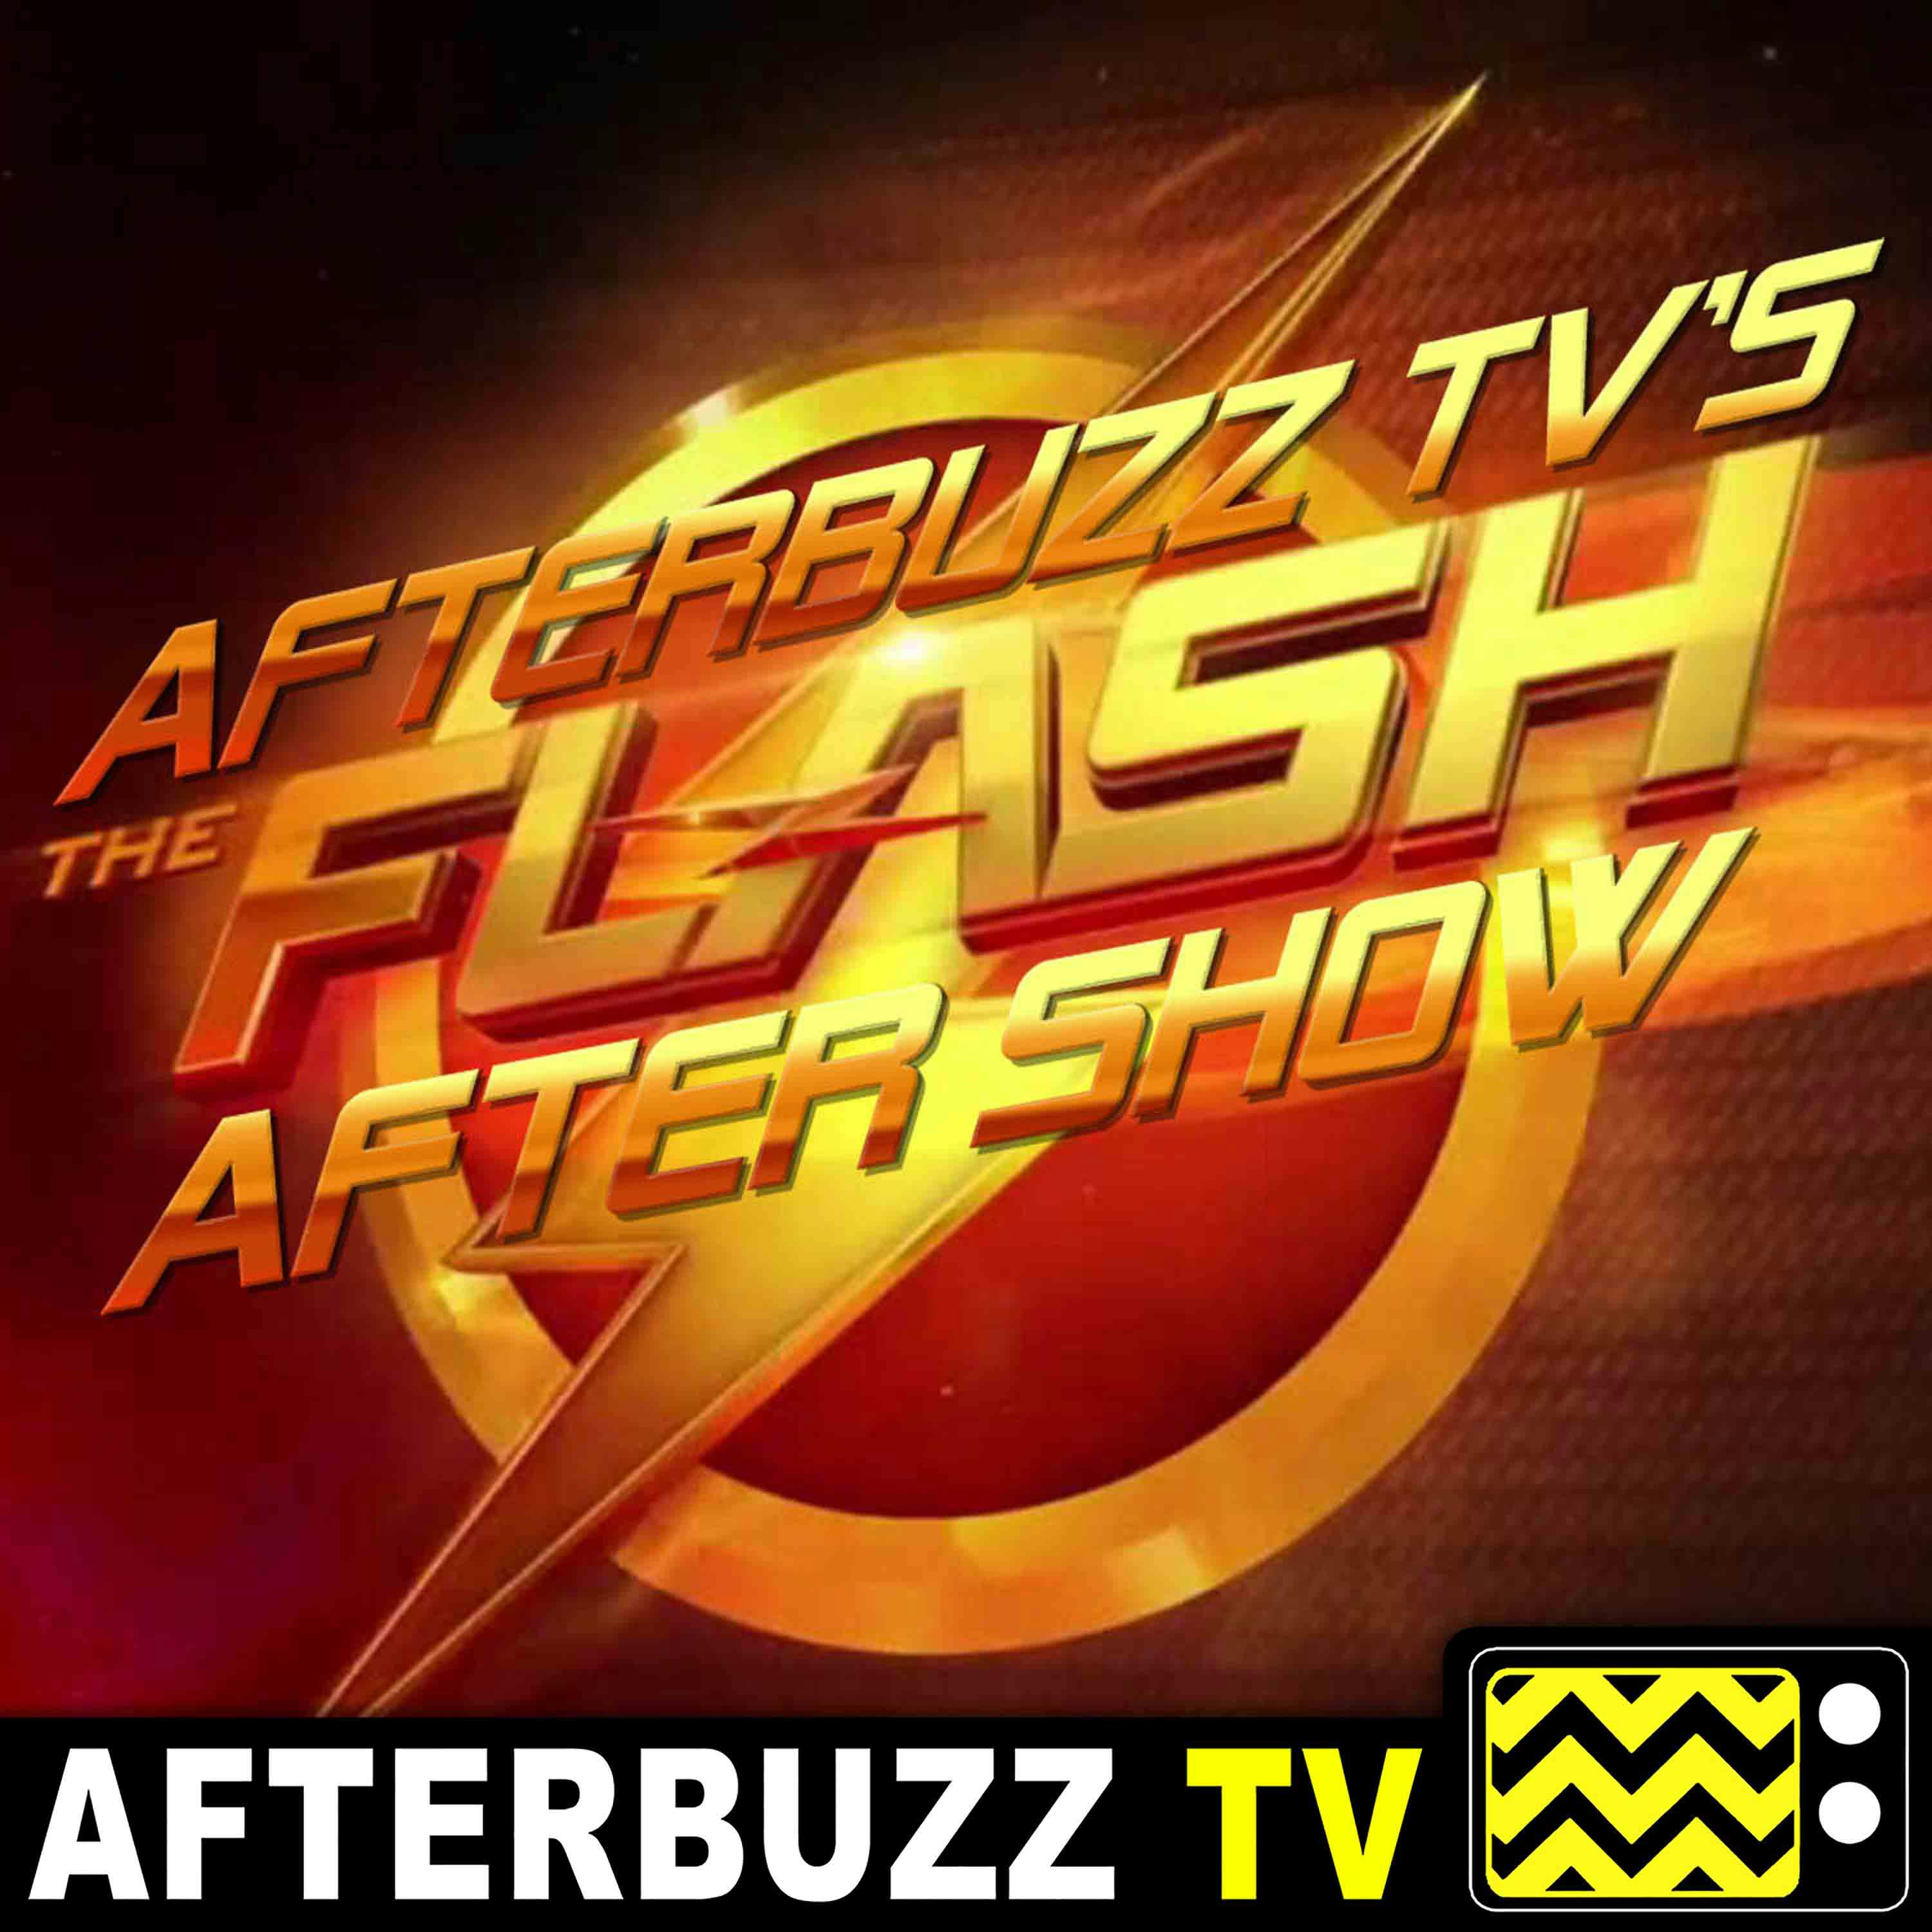 ”Godspeed” Season 5 Episode 18 ’The Flash’ Review